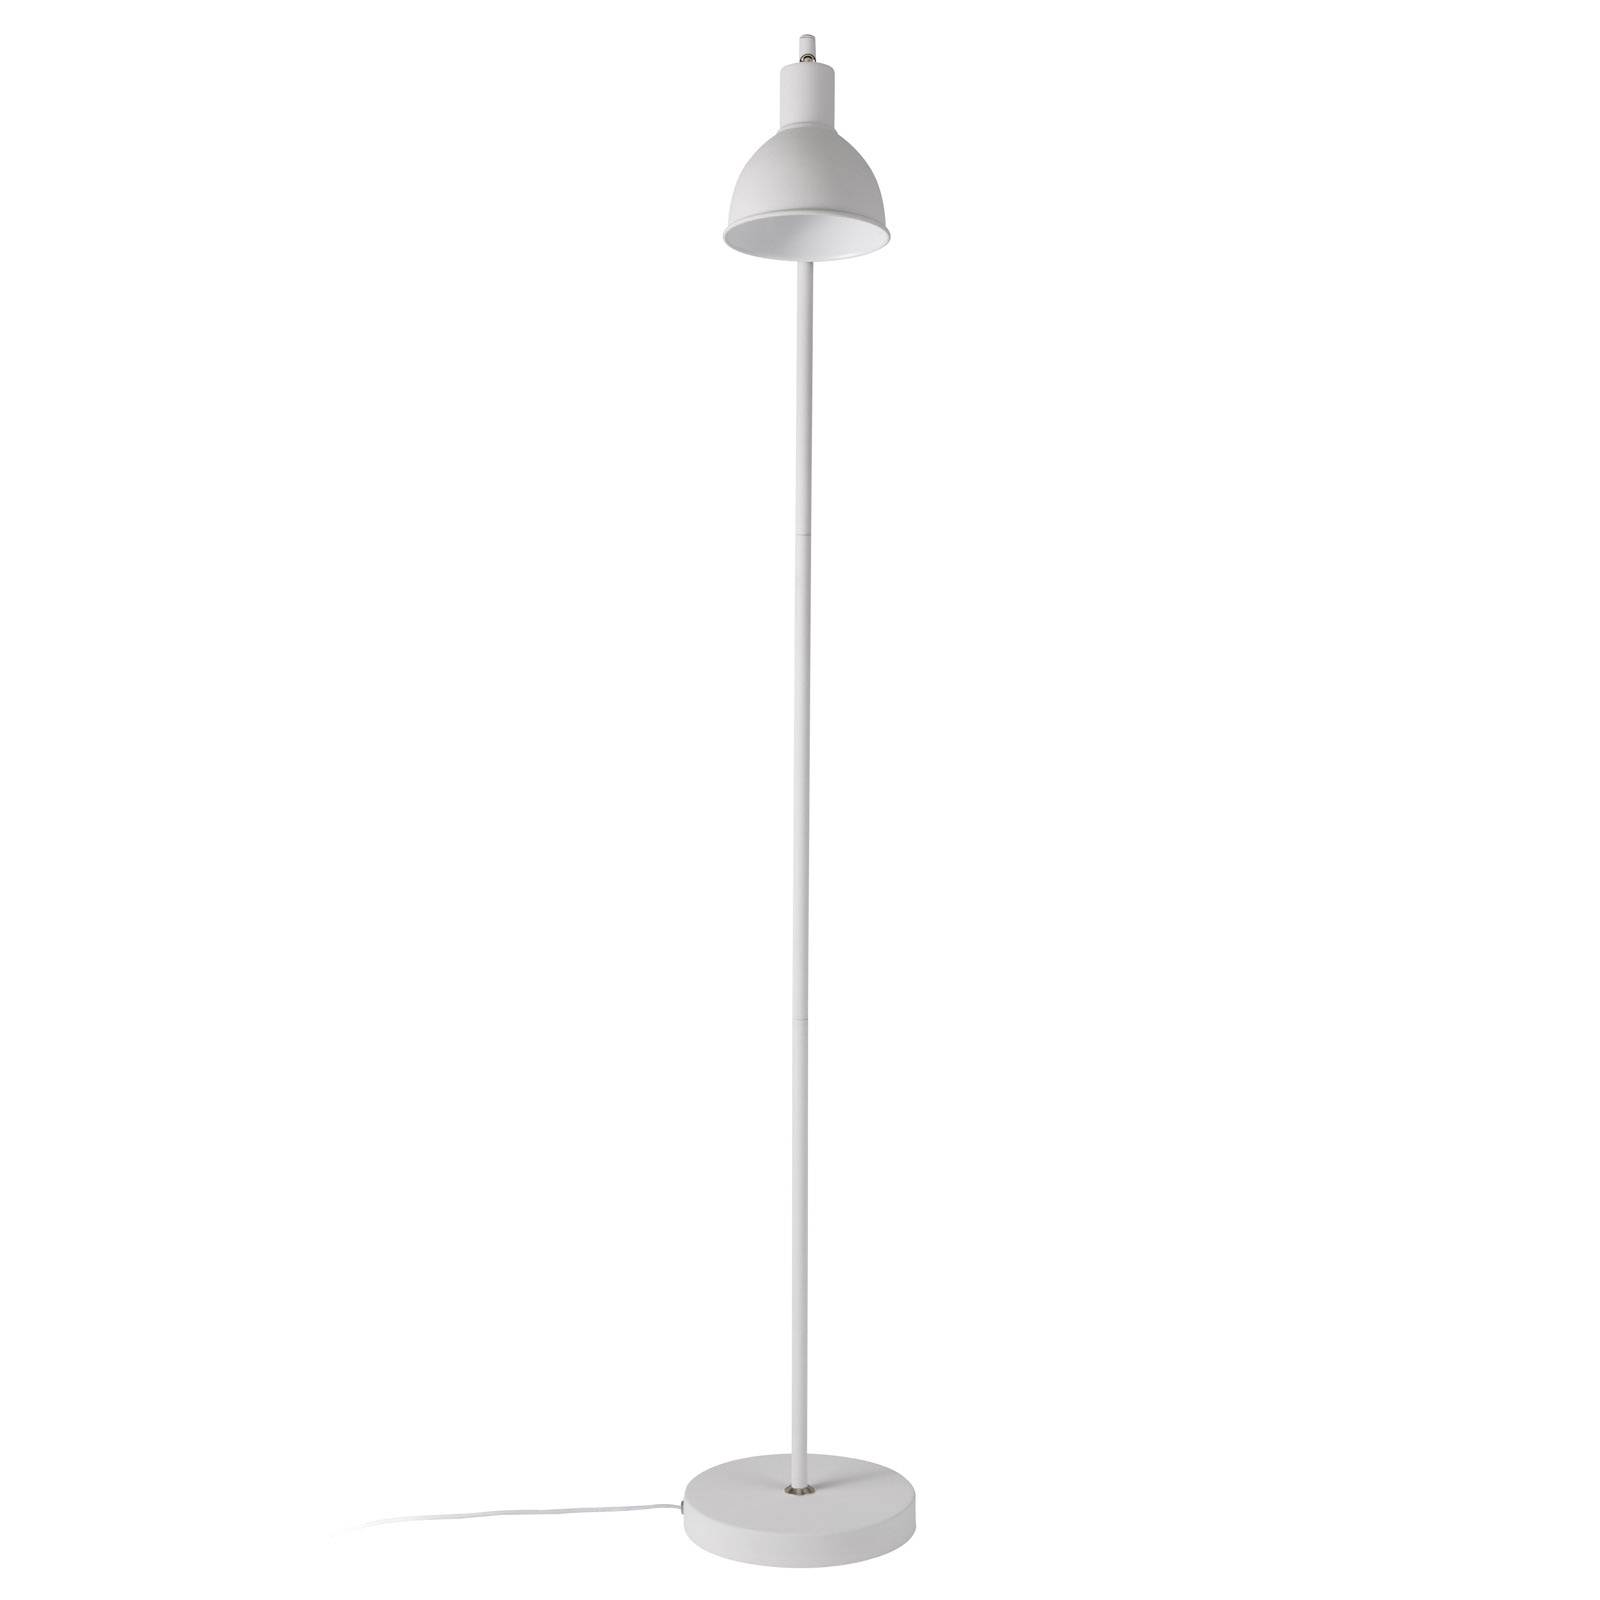 Pop floor lamp in a delicate design, white